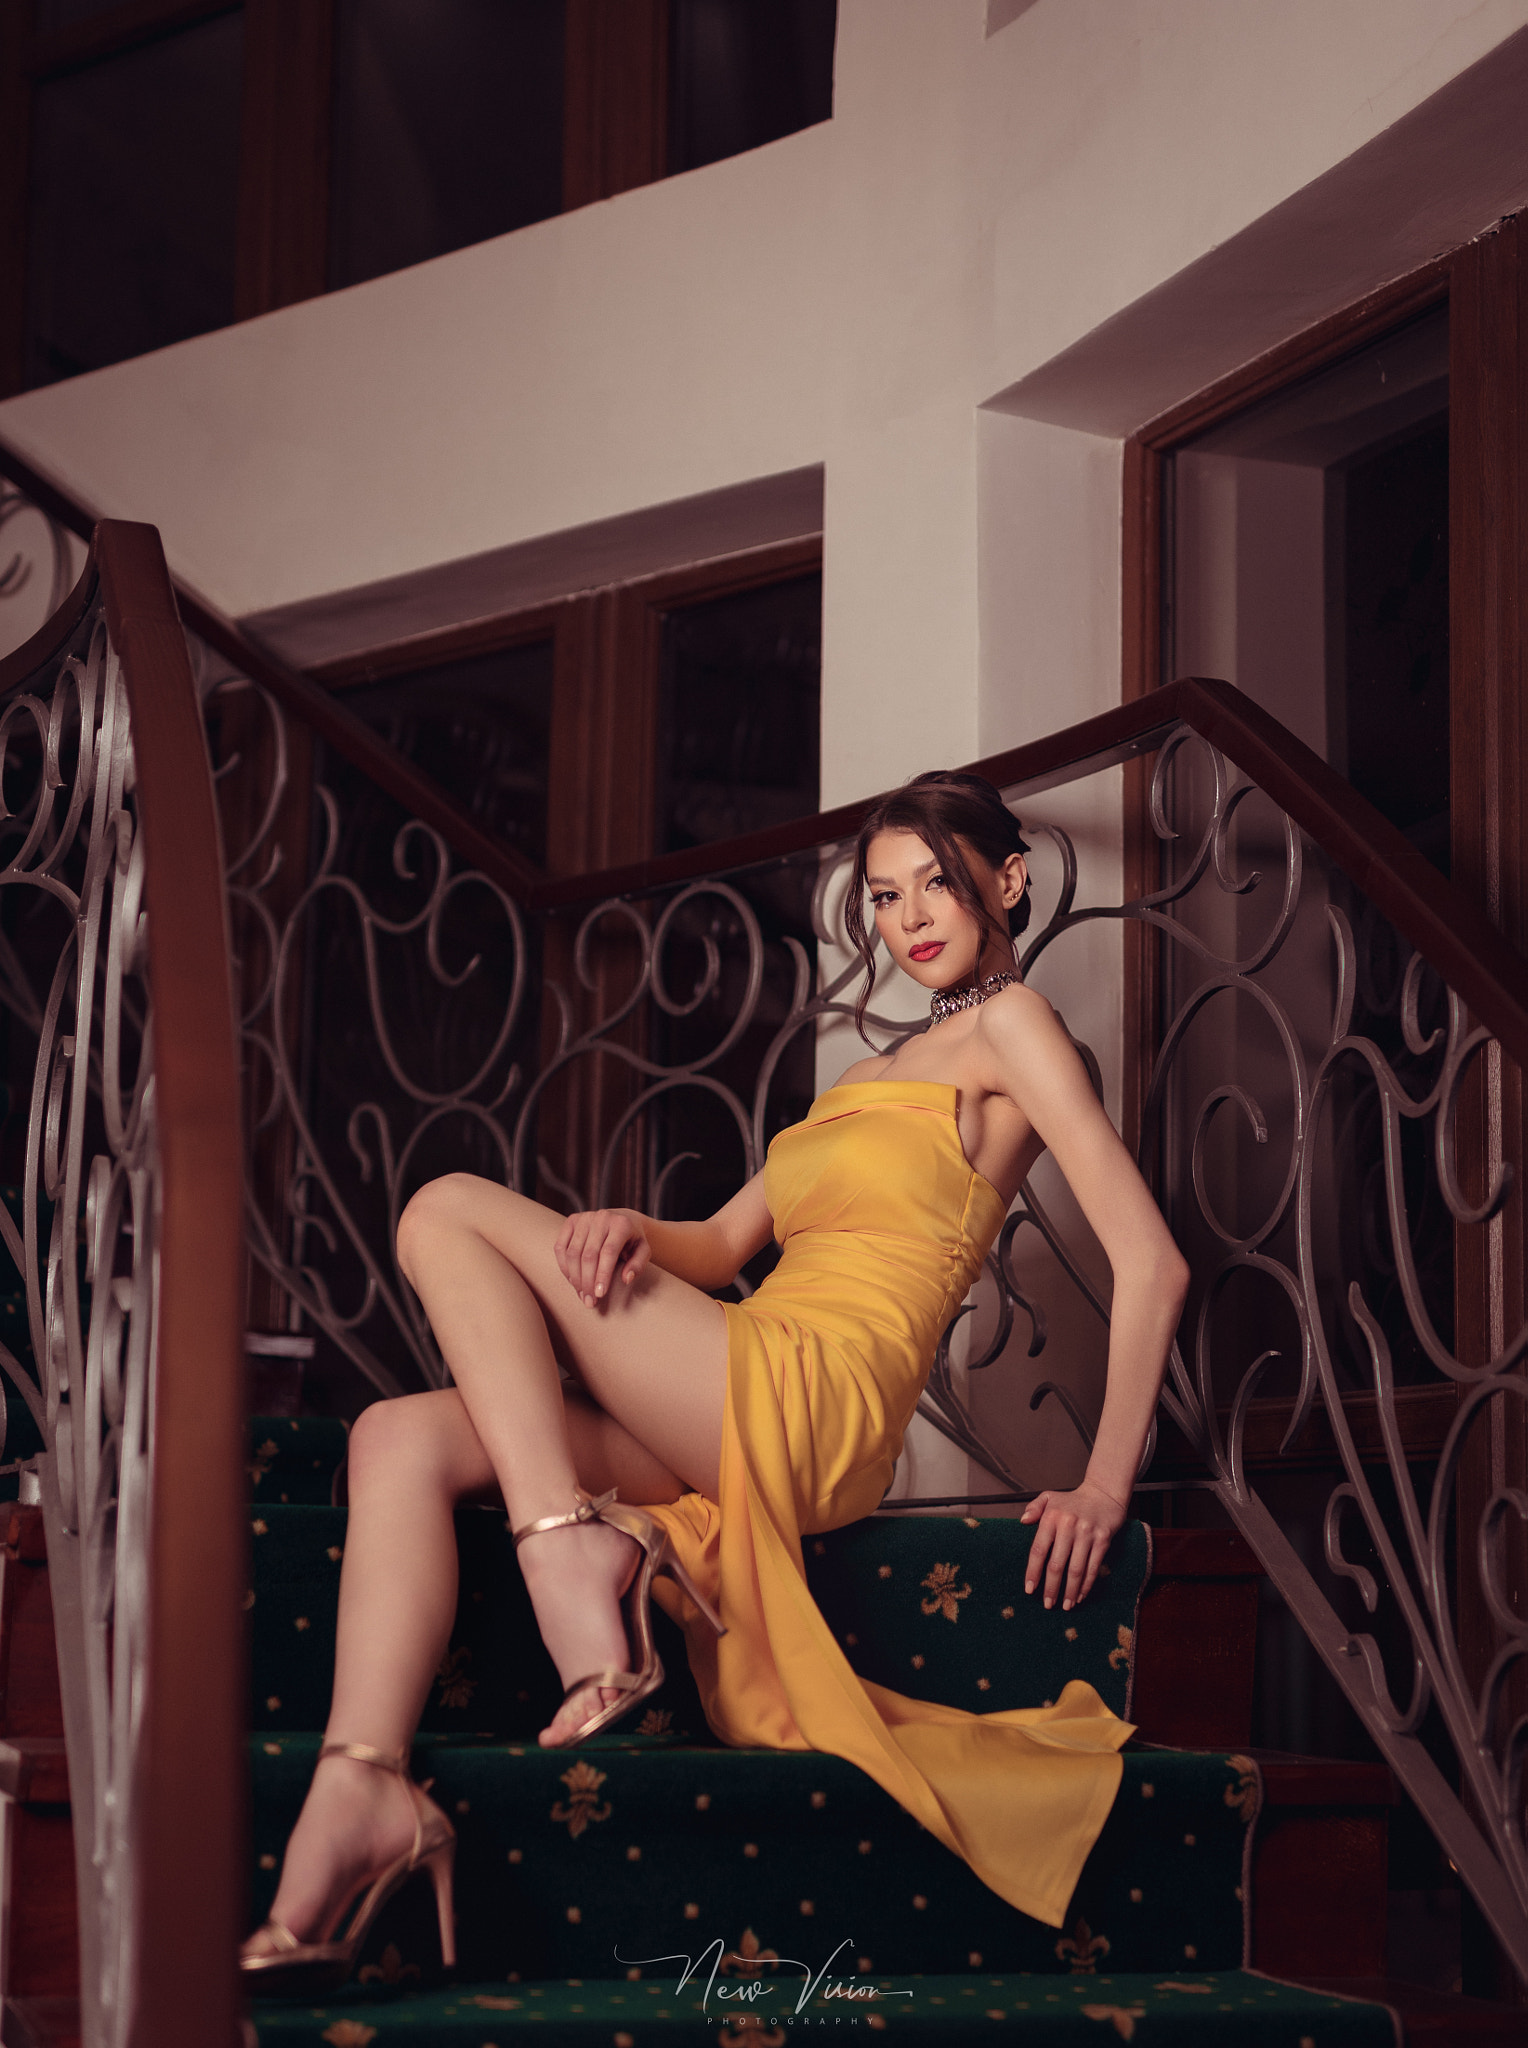 Andrei Lupu Women Brunette Makeup Dress Yellow Clothing Looking At Viewer Stairs Legs Heels 1528x2048